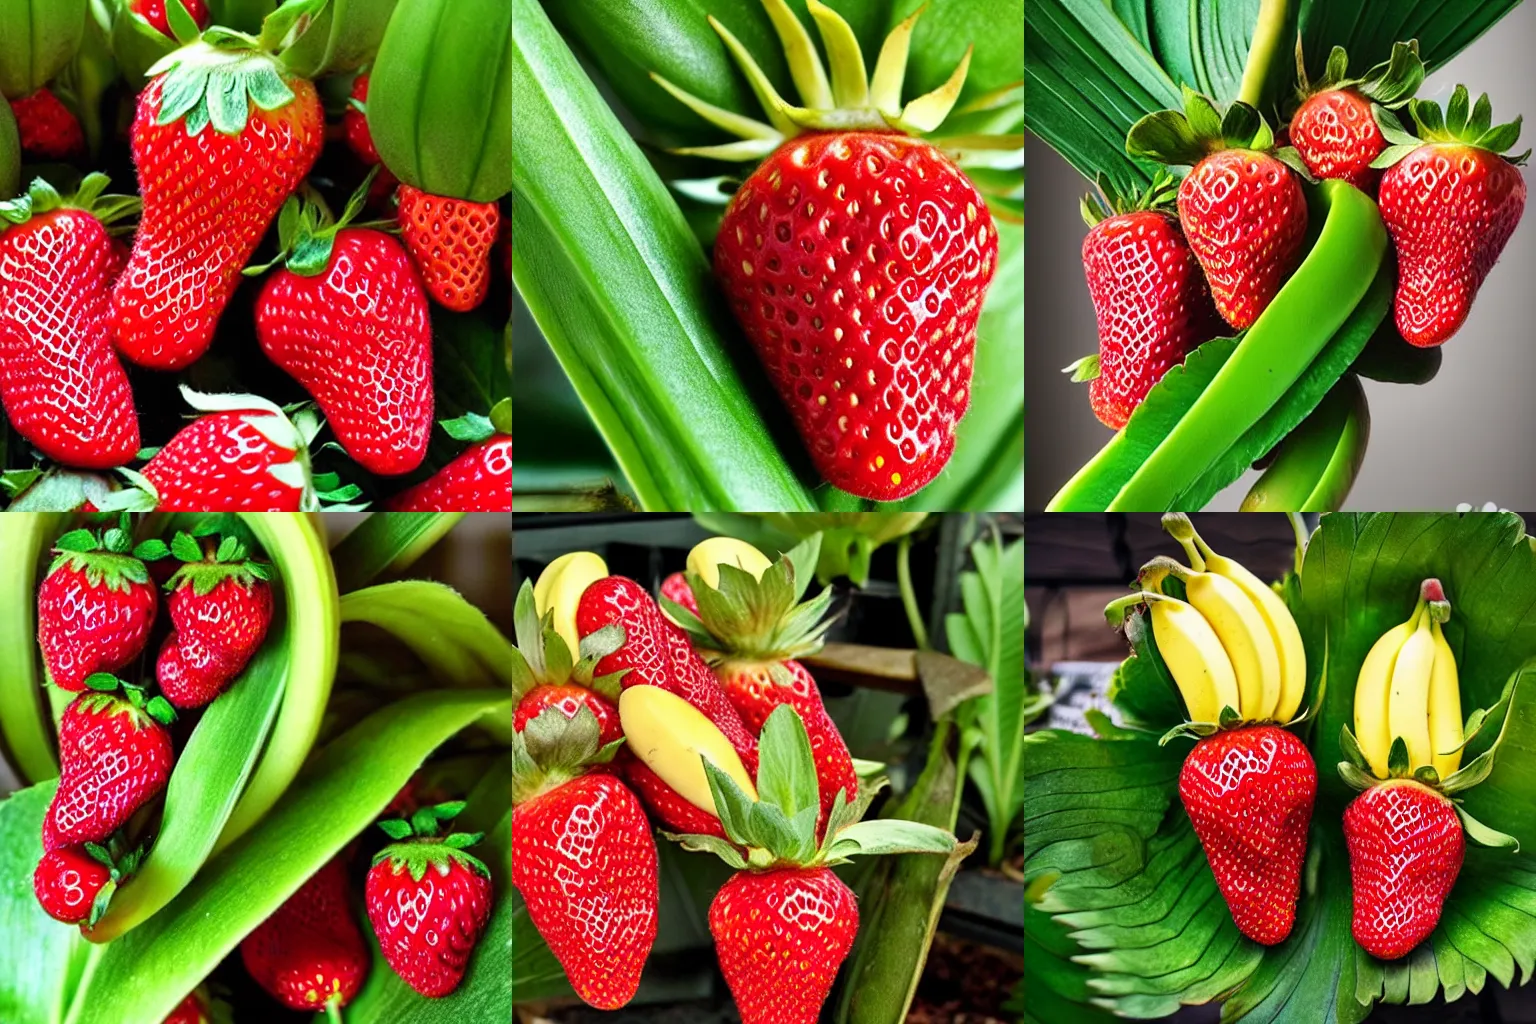 Prompt: strawberry banana hybrid